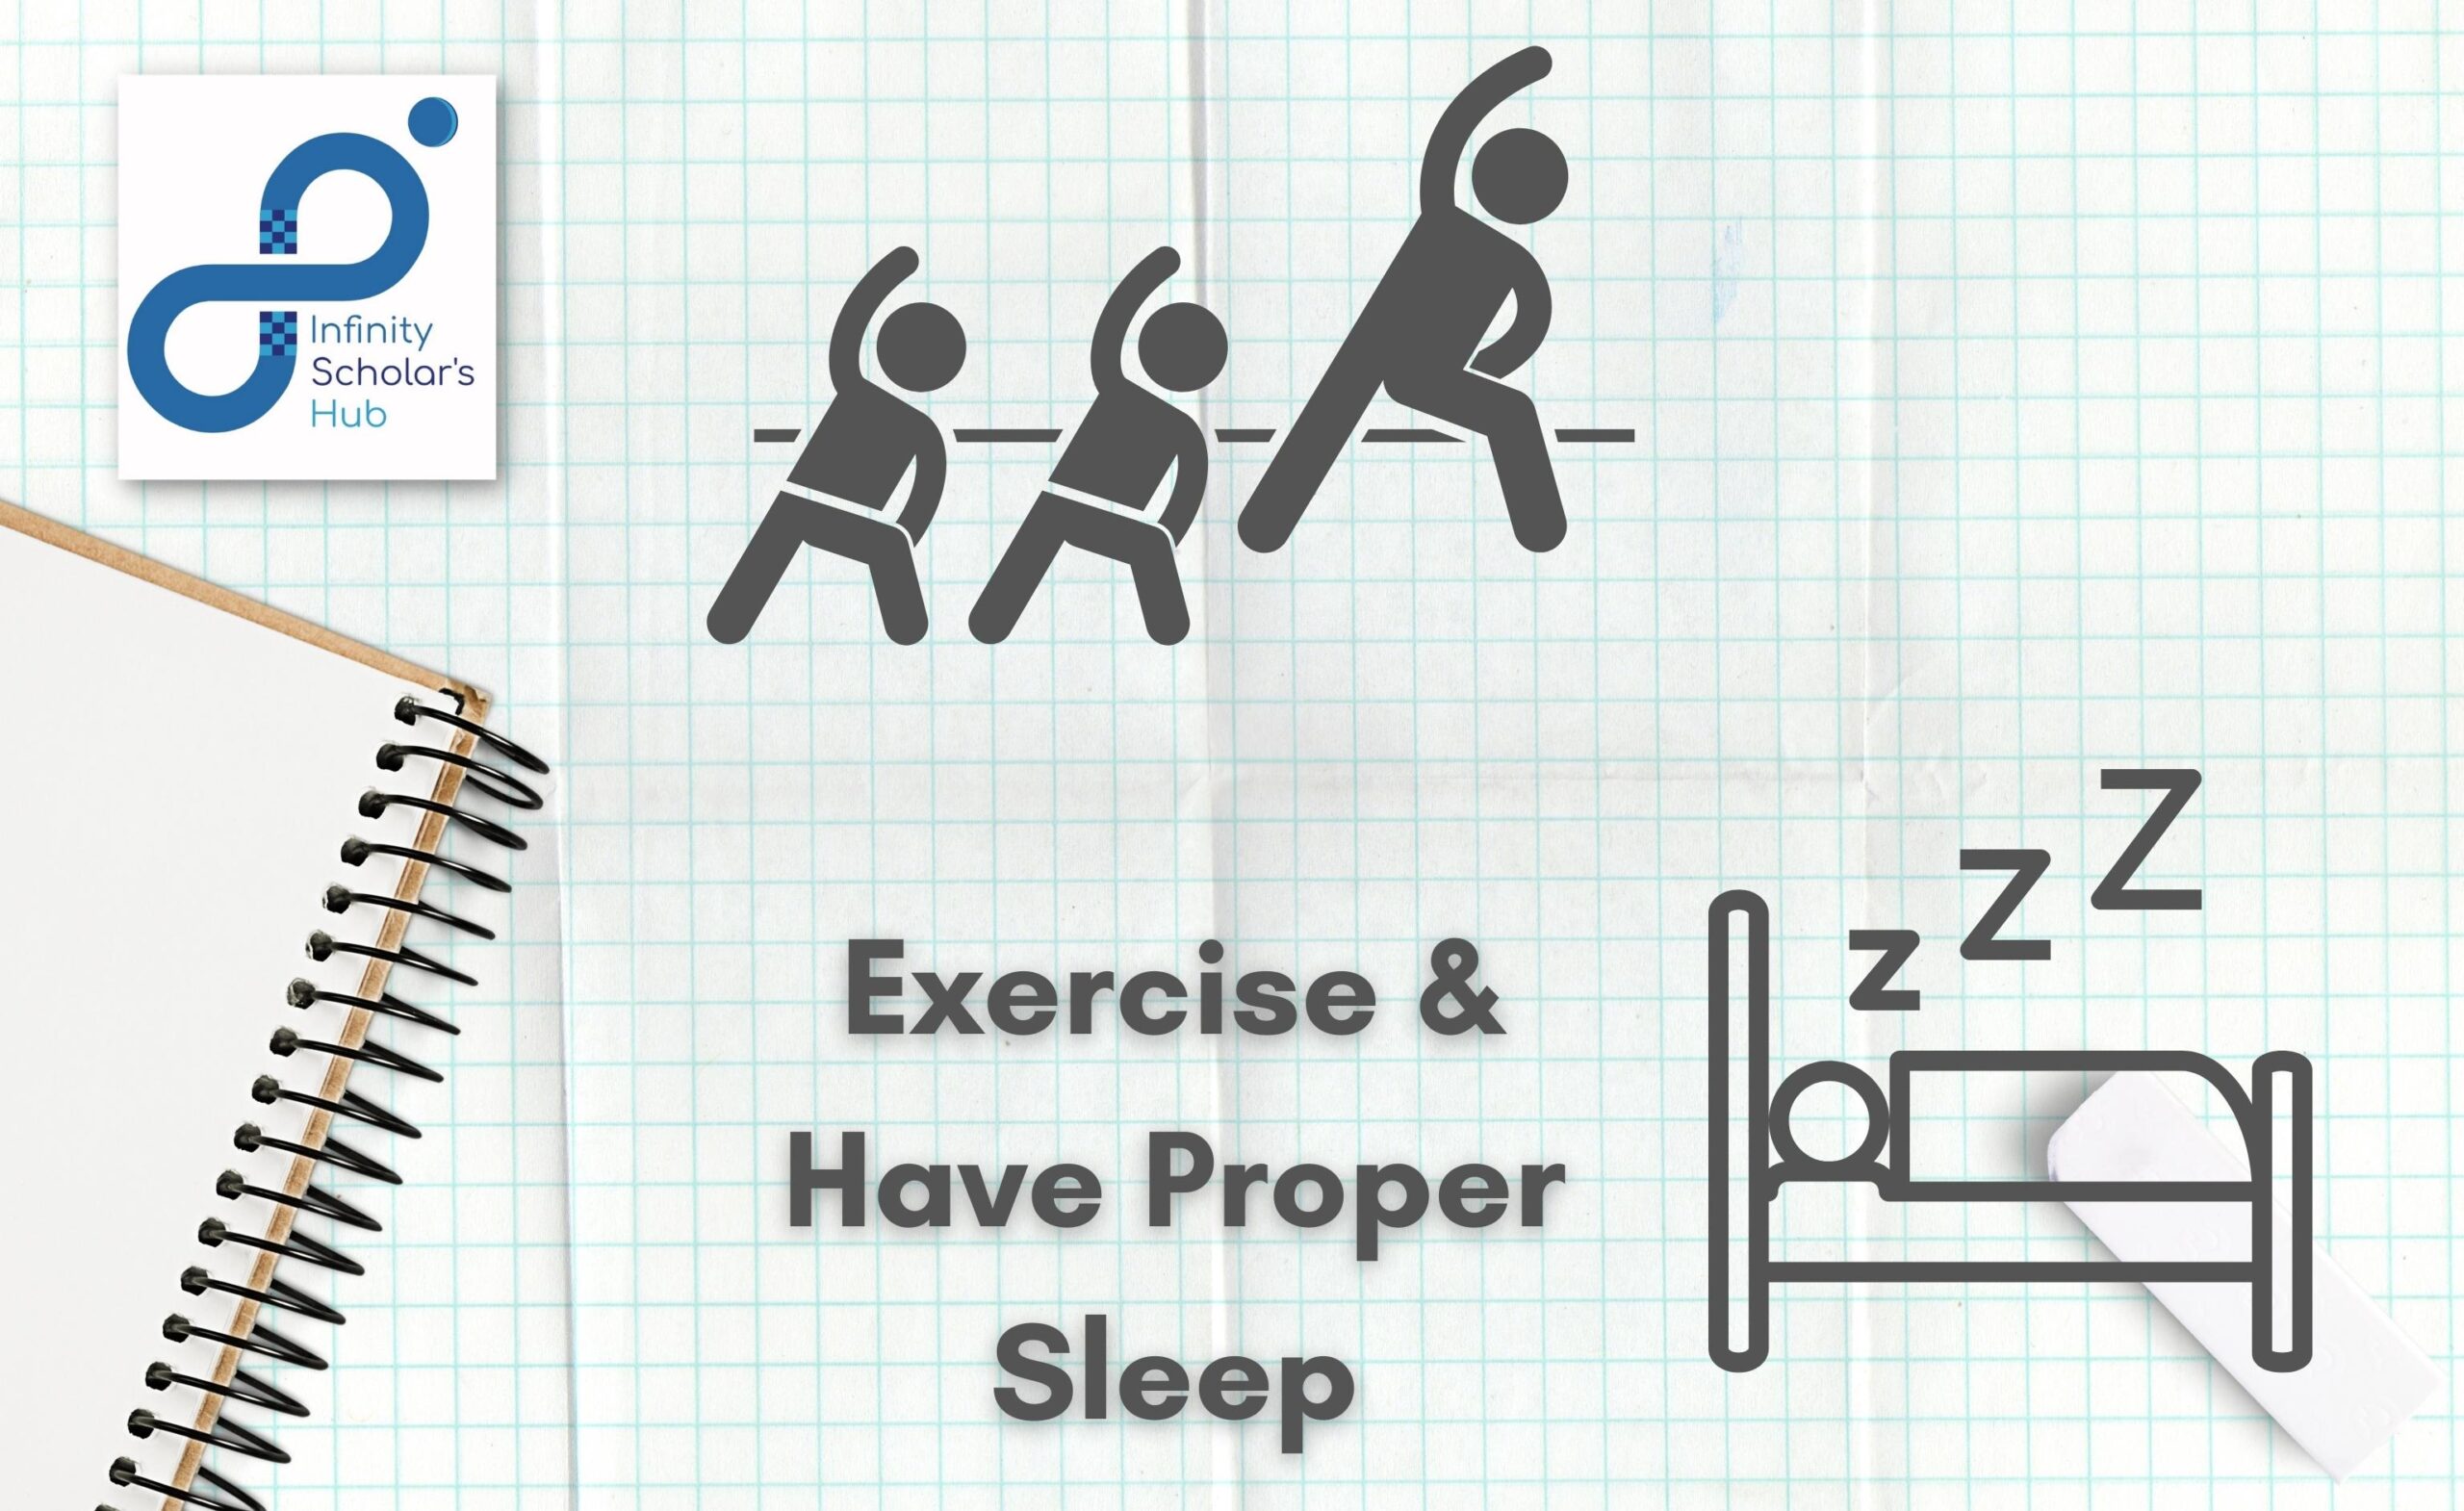 Exercise & Have Proper Sleep